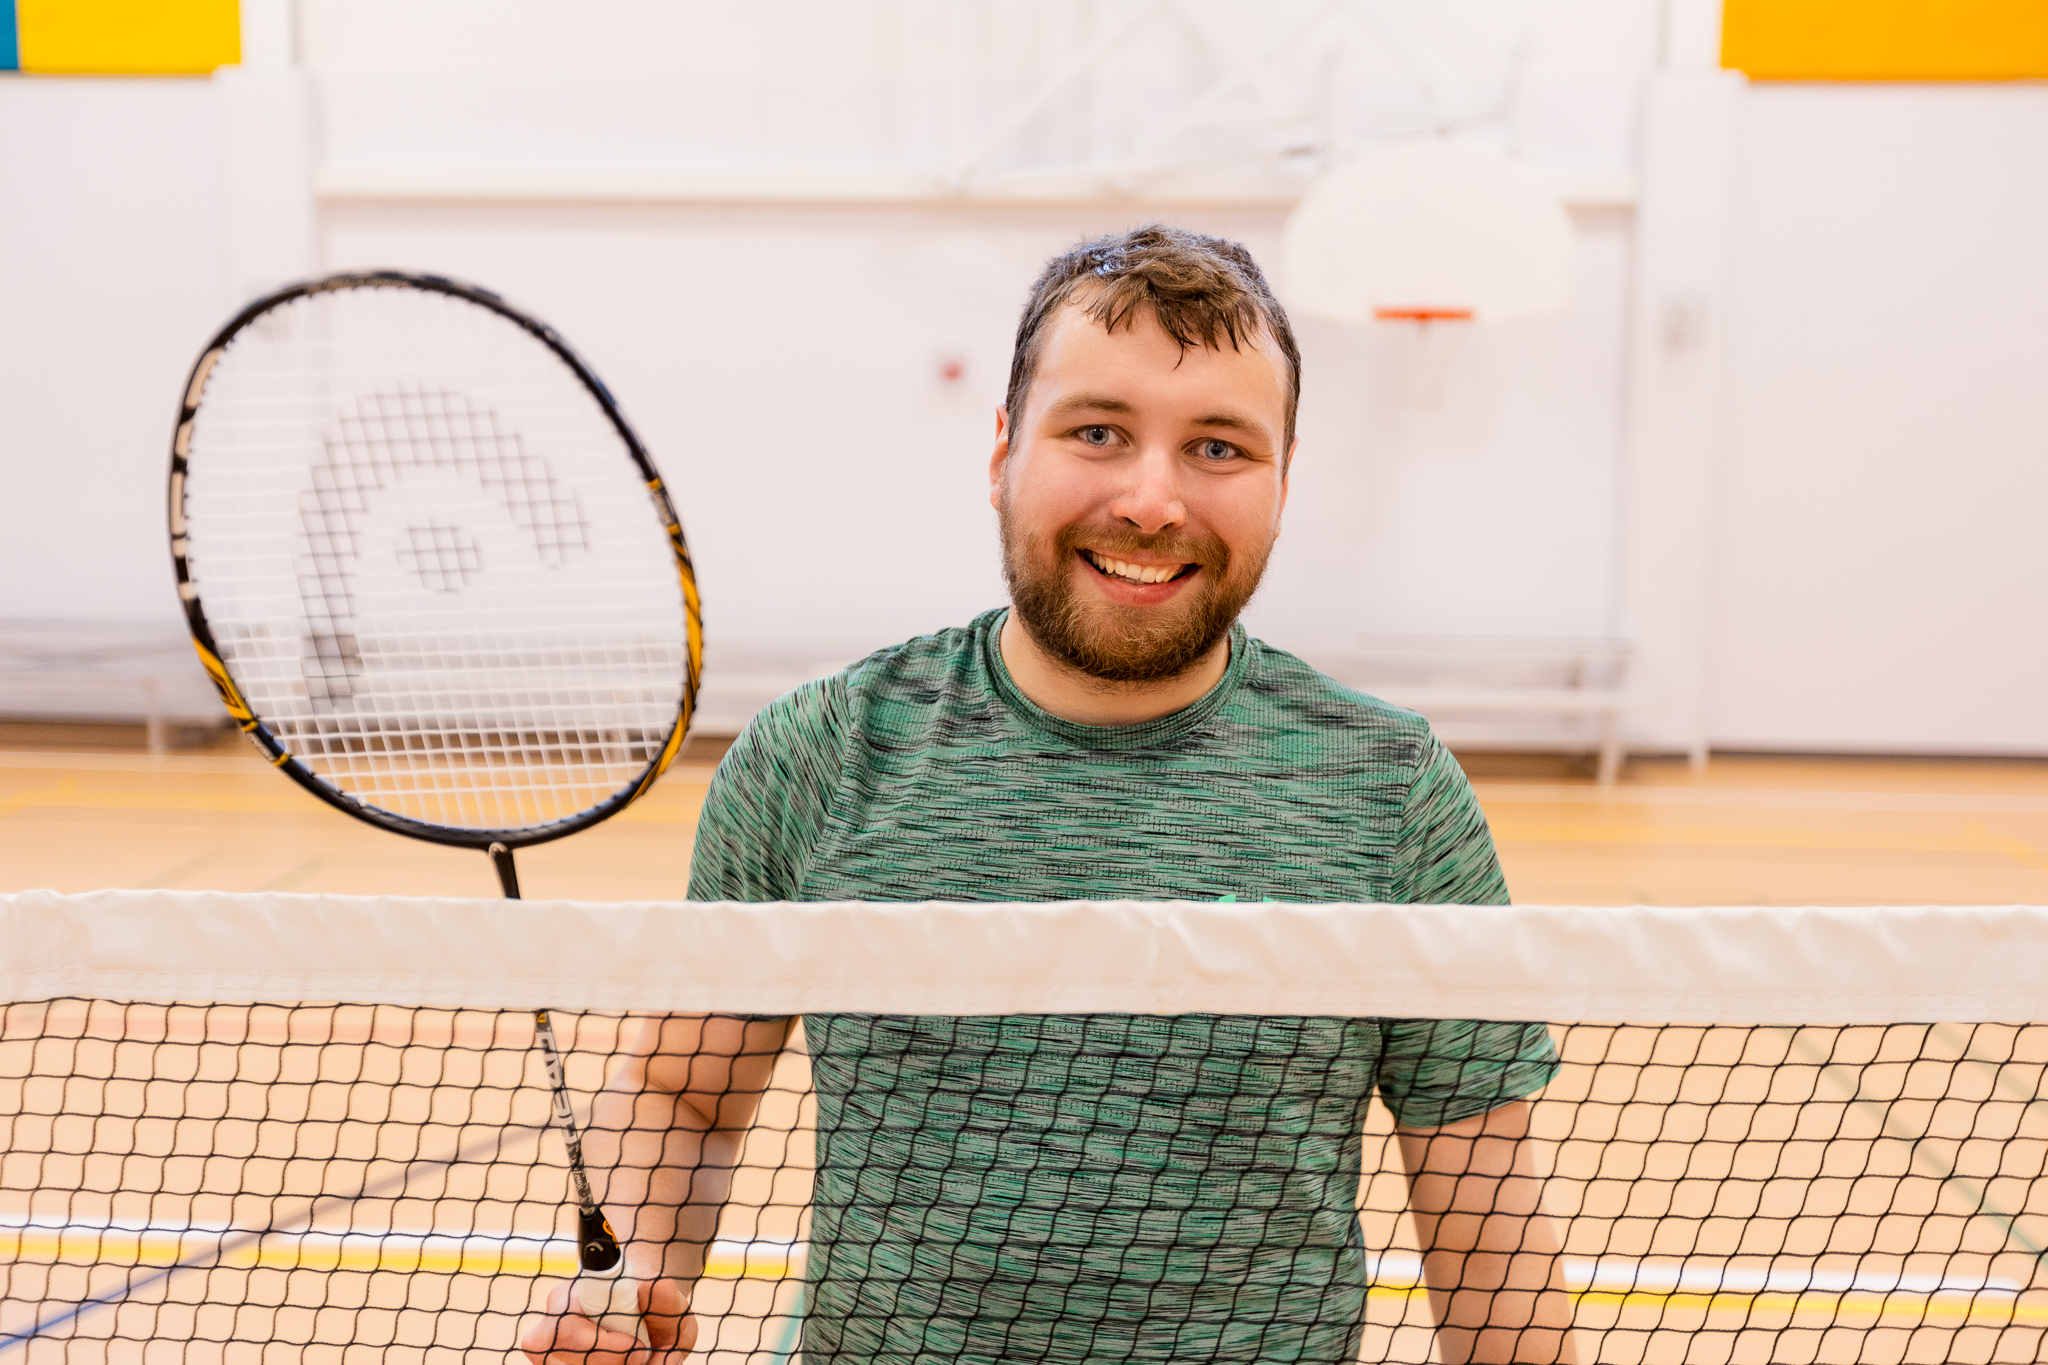 a man smiling holding a badminton racket